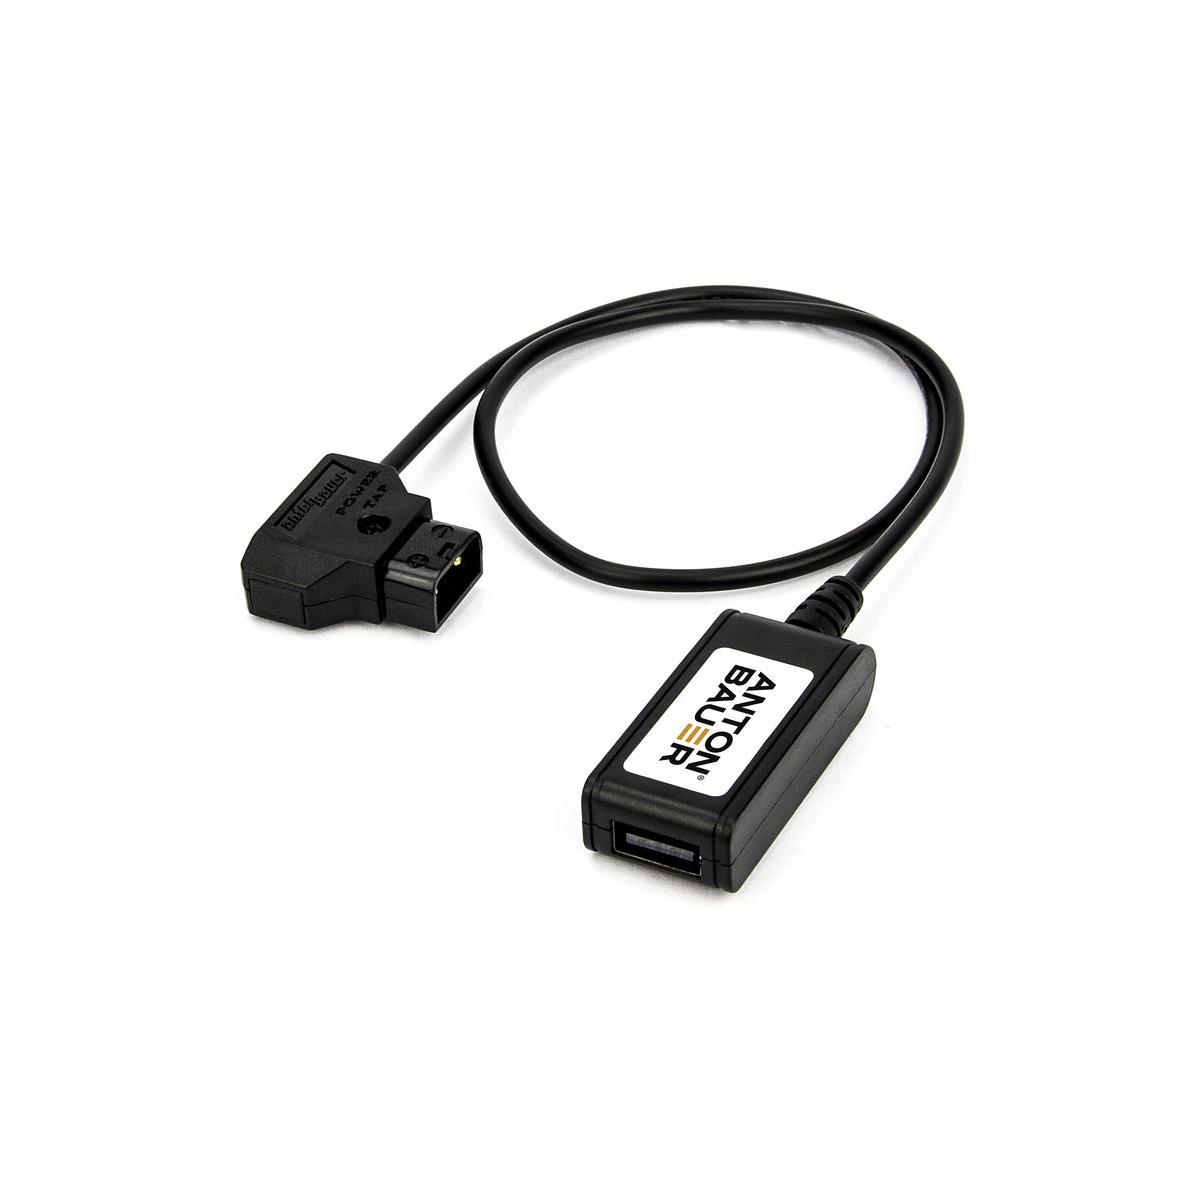 Image of Anton Bauer USB Adaptor Male PowerTap to USB 2.0 Adapter